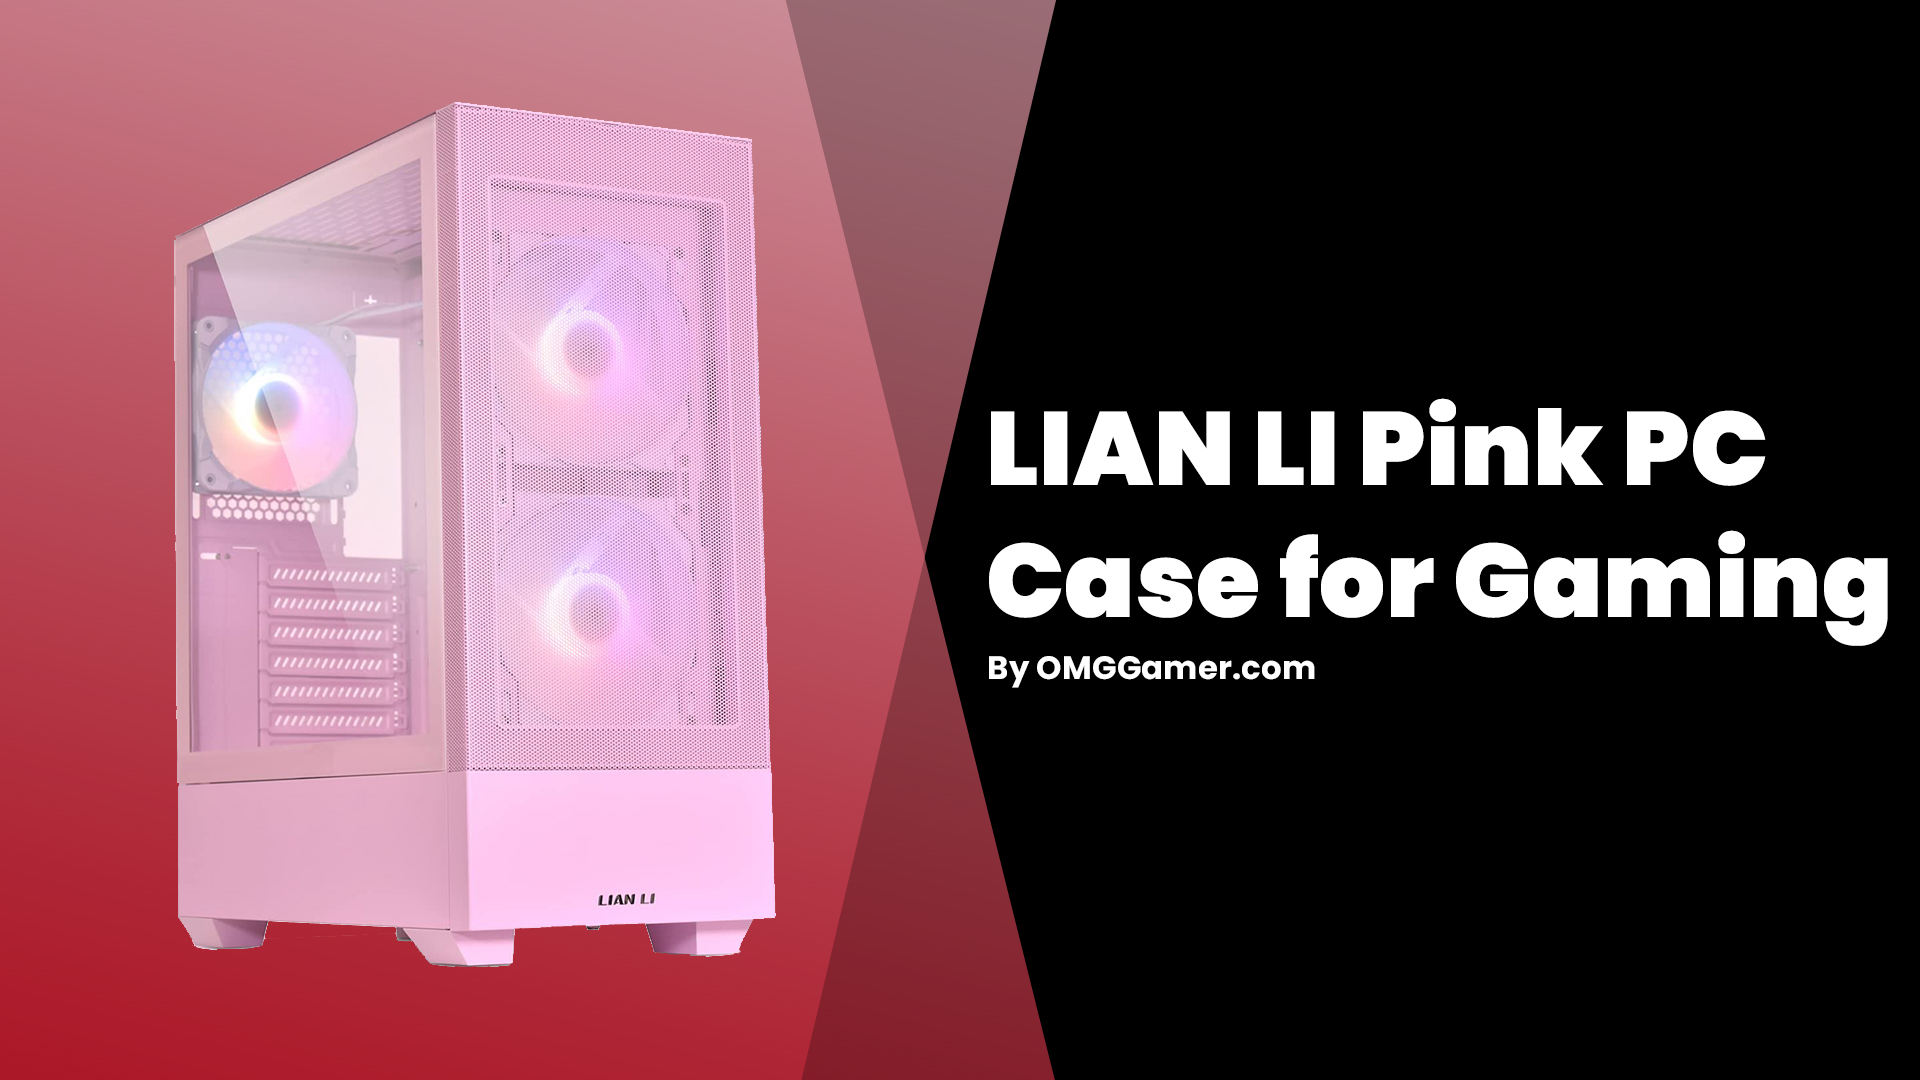 LIAN LI Pink PC Case for Gaming